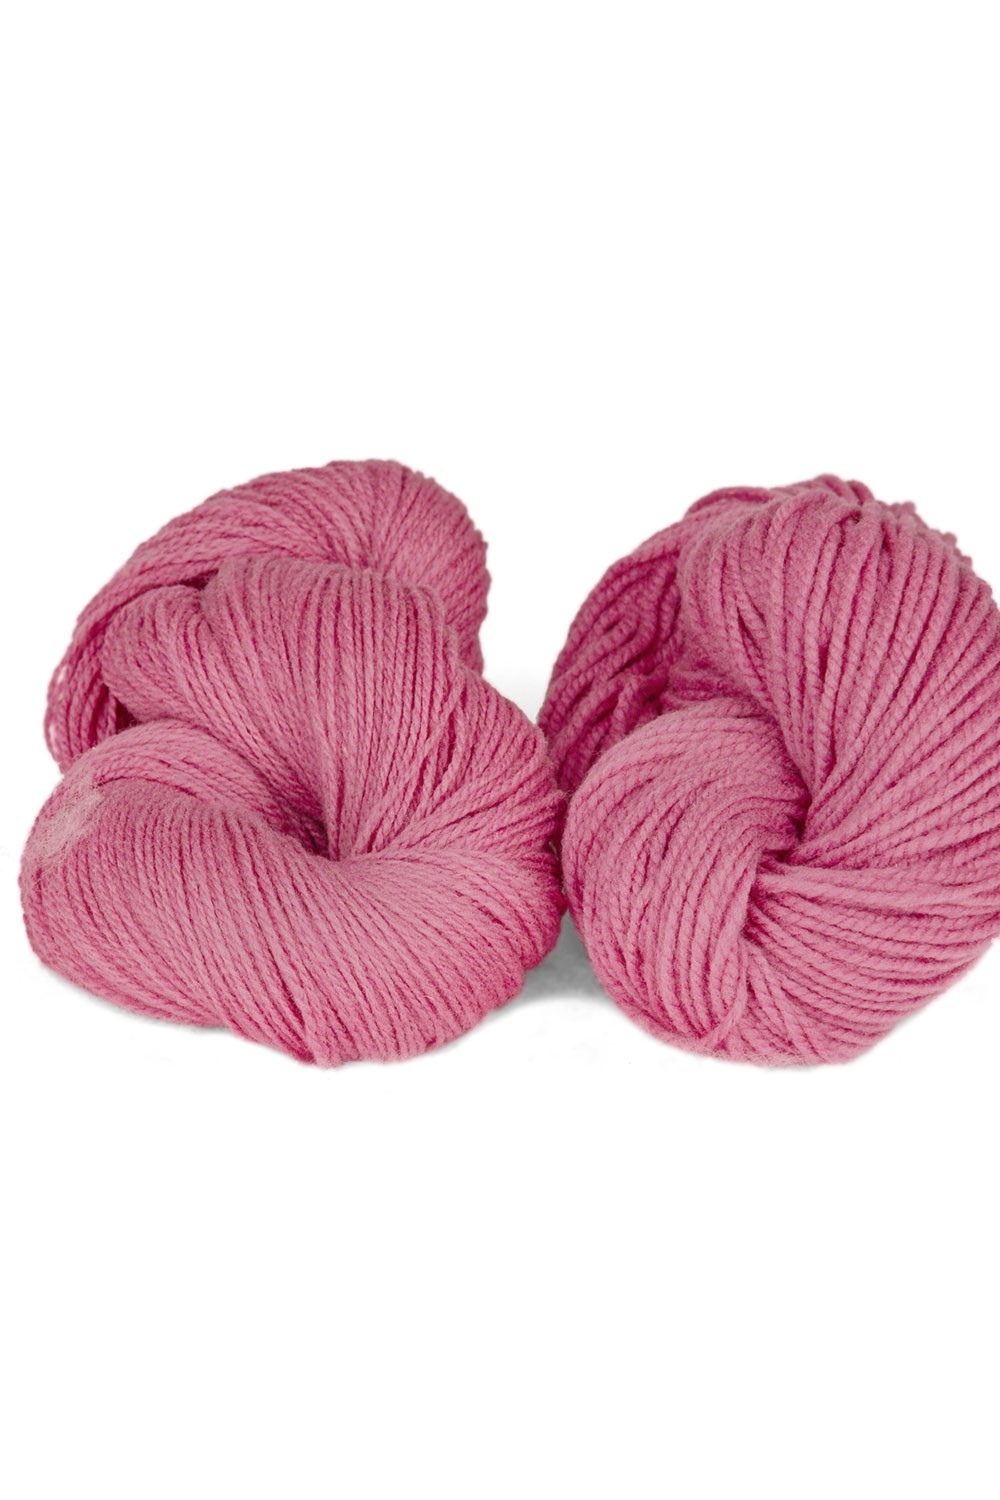 Finkhof Merinowolle dünn gefärbt rosa